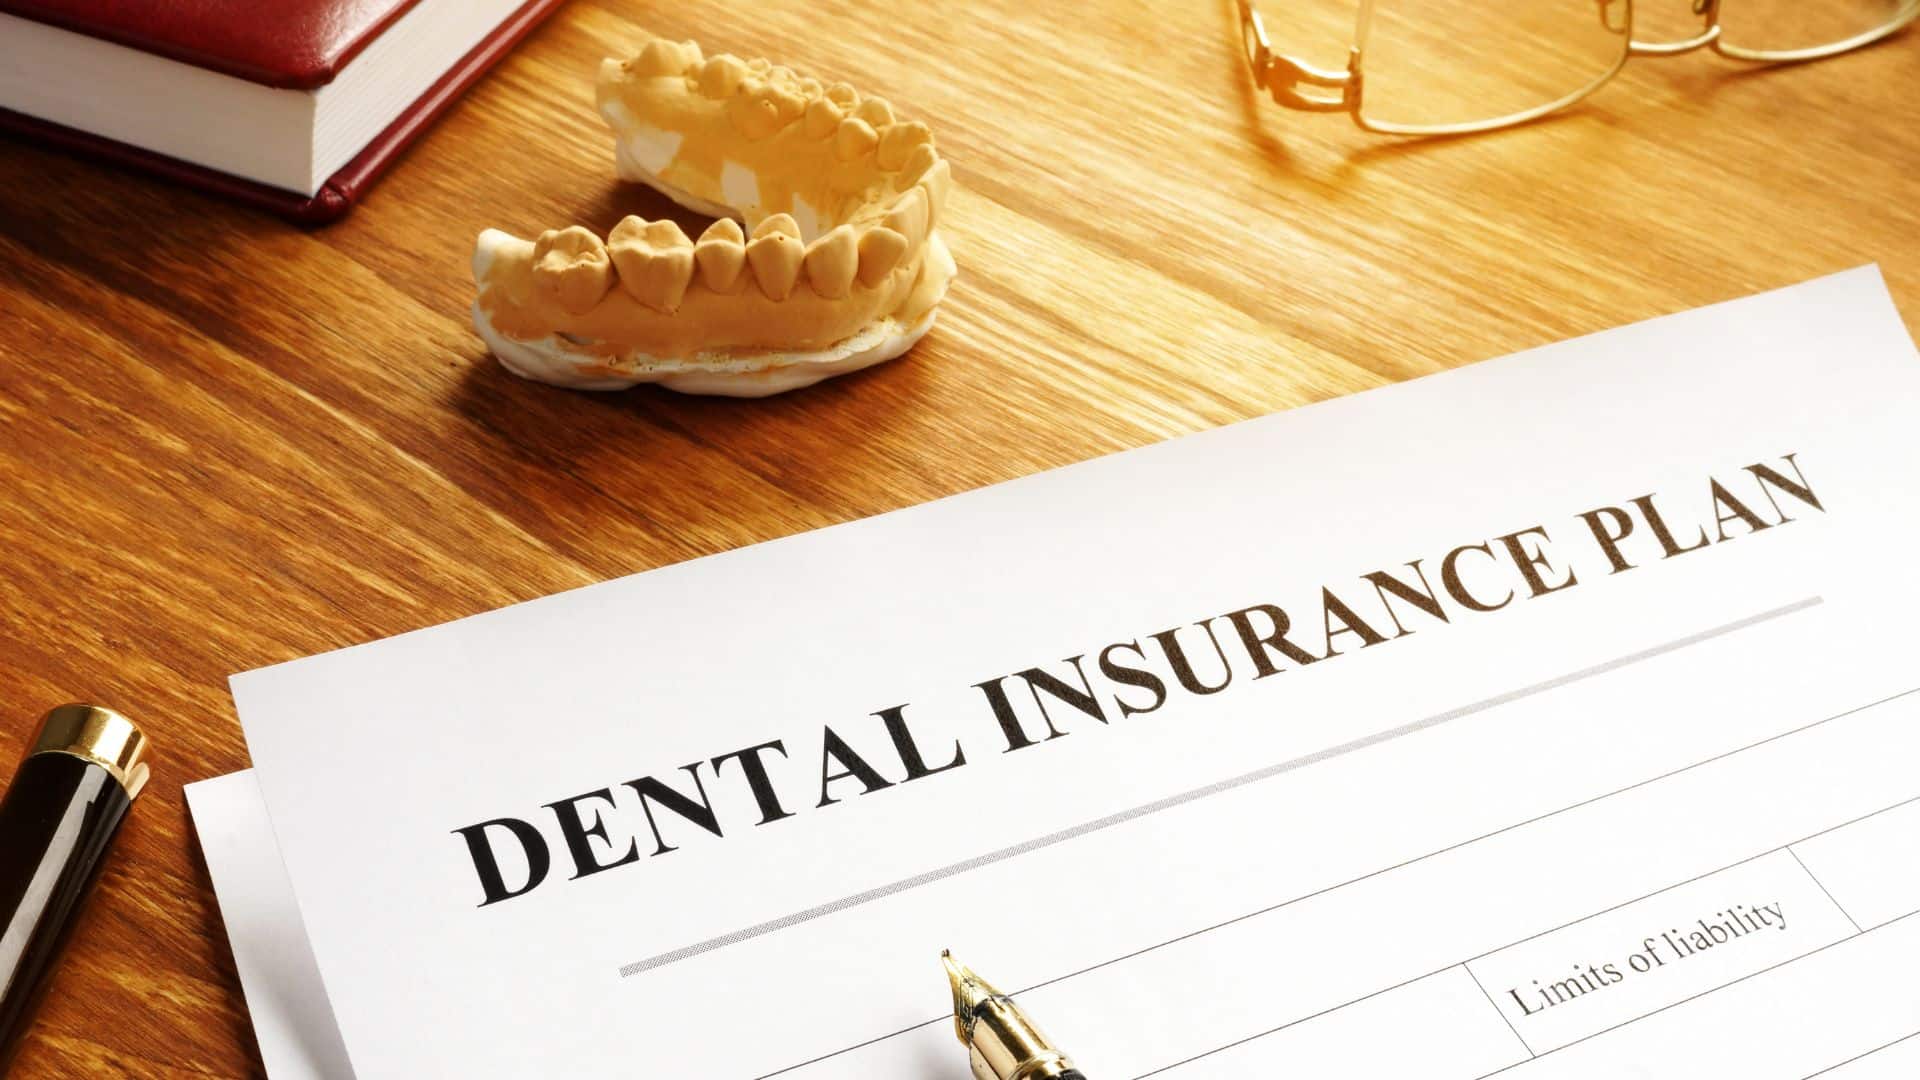 dental insurance plan paperwork sitting on top of a desk